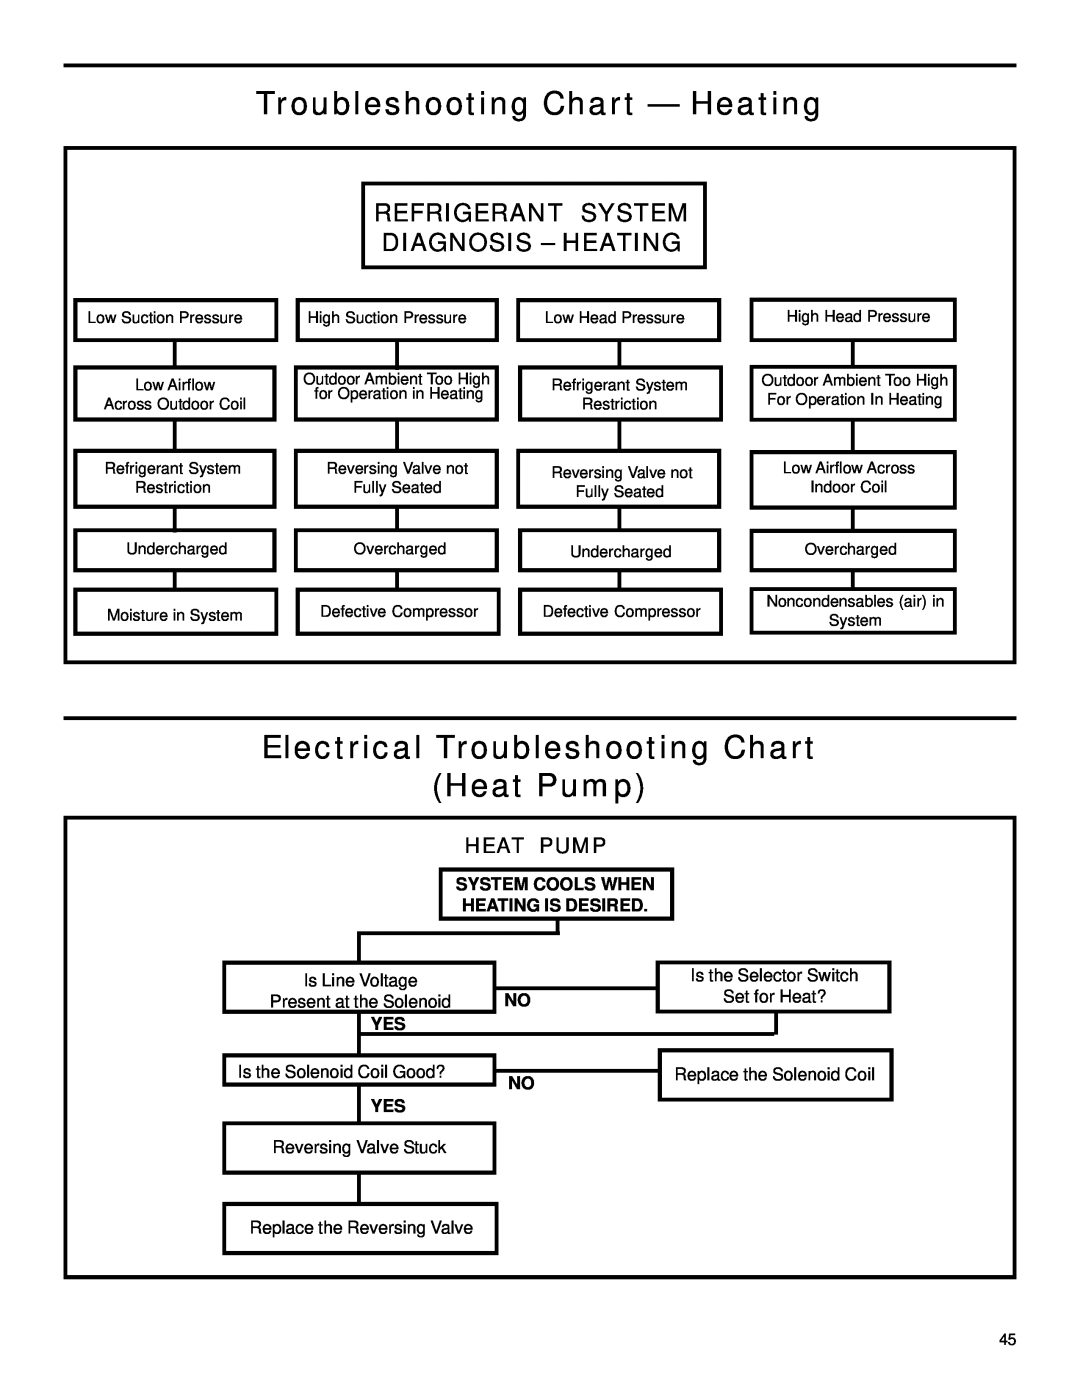 Friedrich 2003 service manual Troubleshooting Chart - Heating, Electrical Troubleshooting Chart Heat Pump 